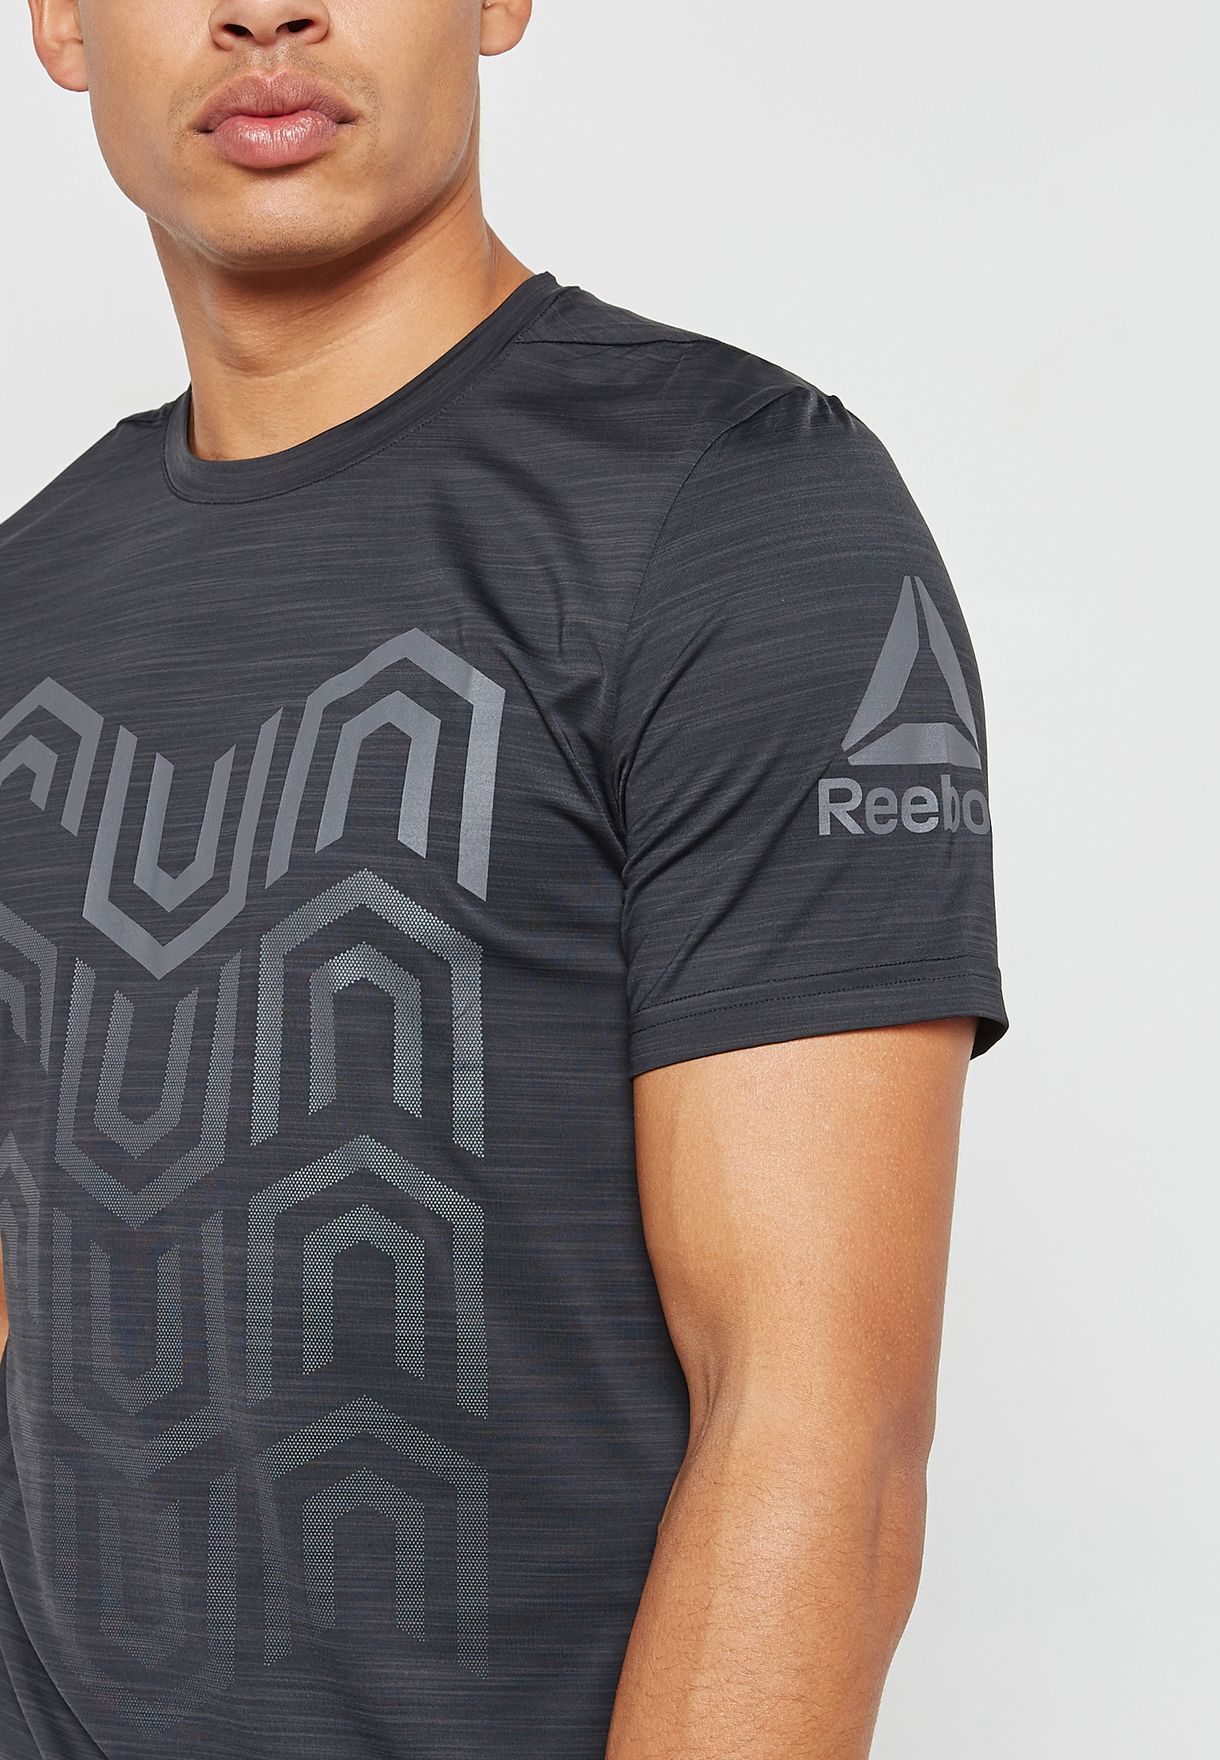 Misterio Activamente cortar Buy Reebok prints Activchill T-Shirt for Men in MENA, Worldwide